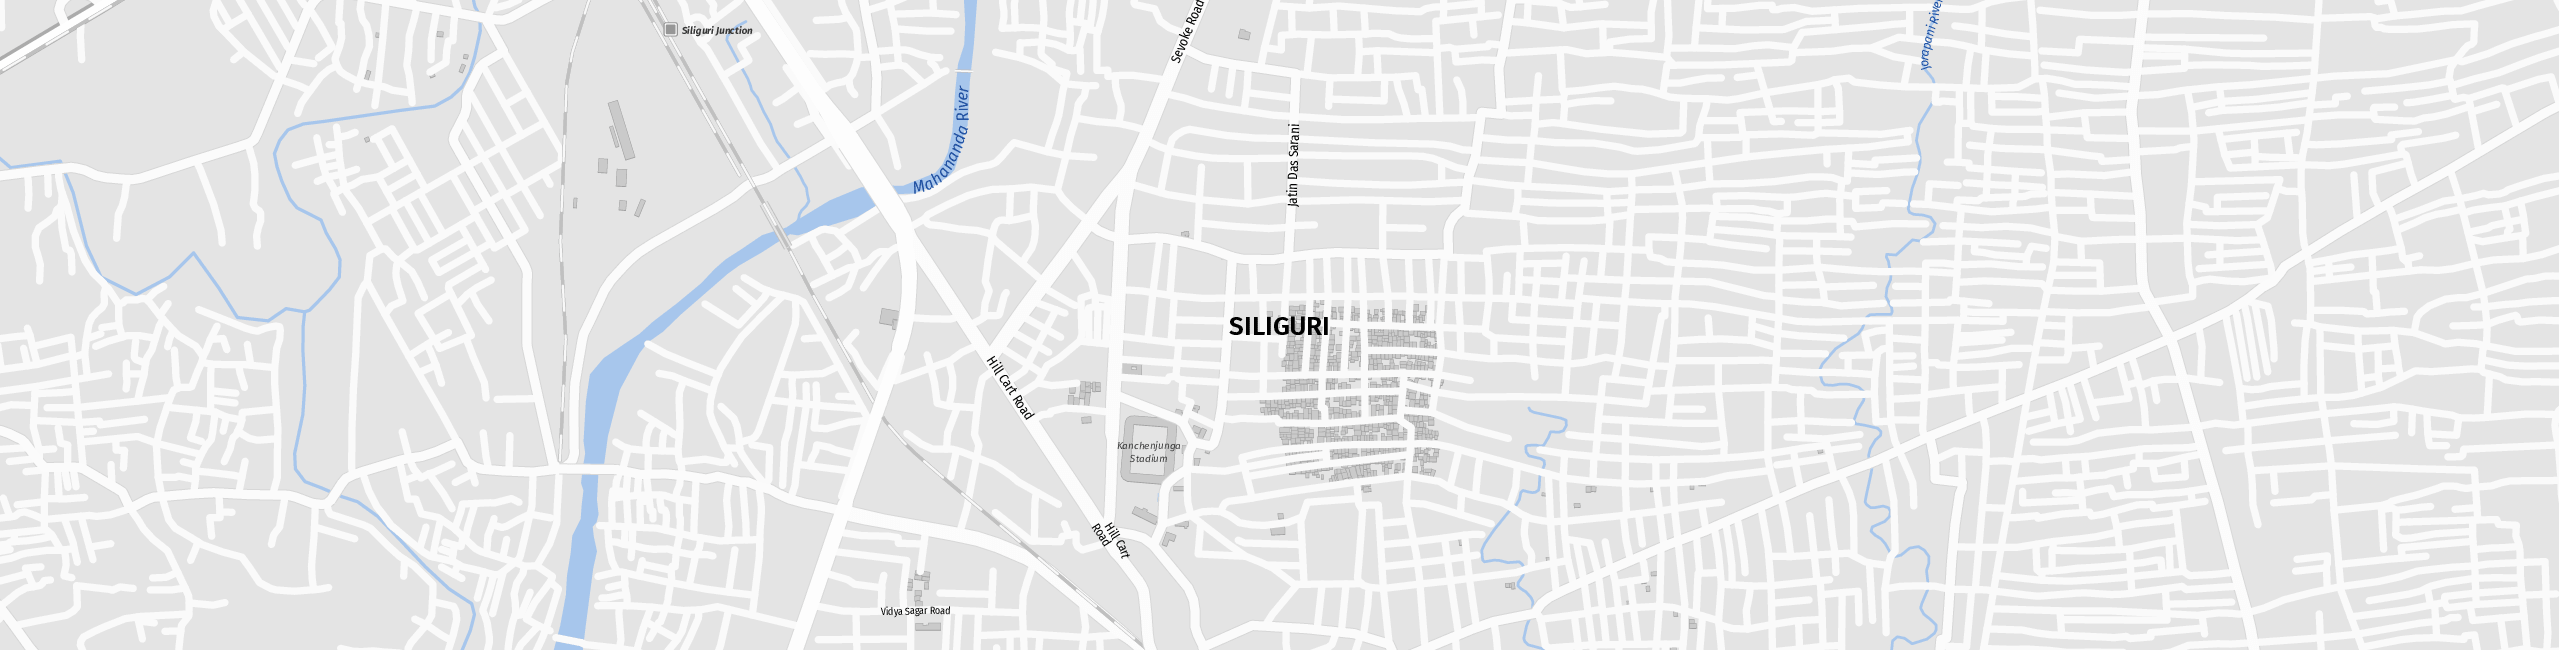 Stadtplan Siliguri zum Downloaden.